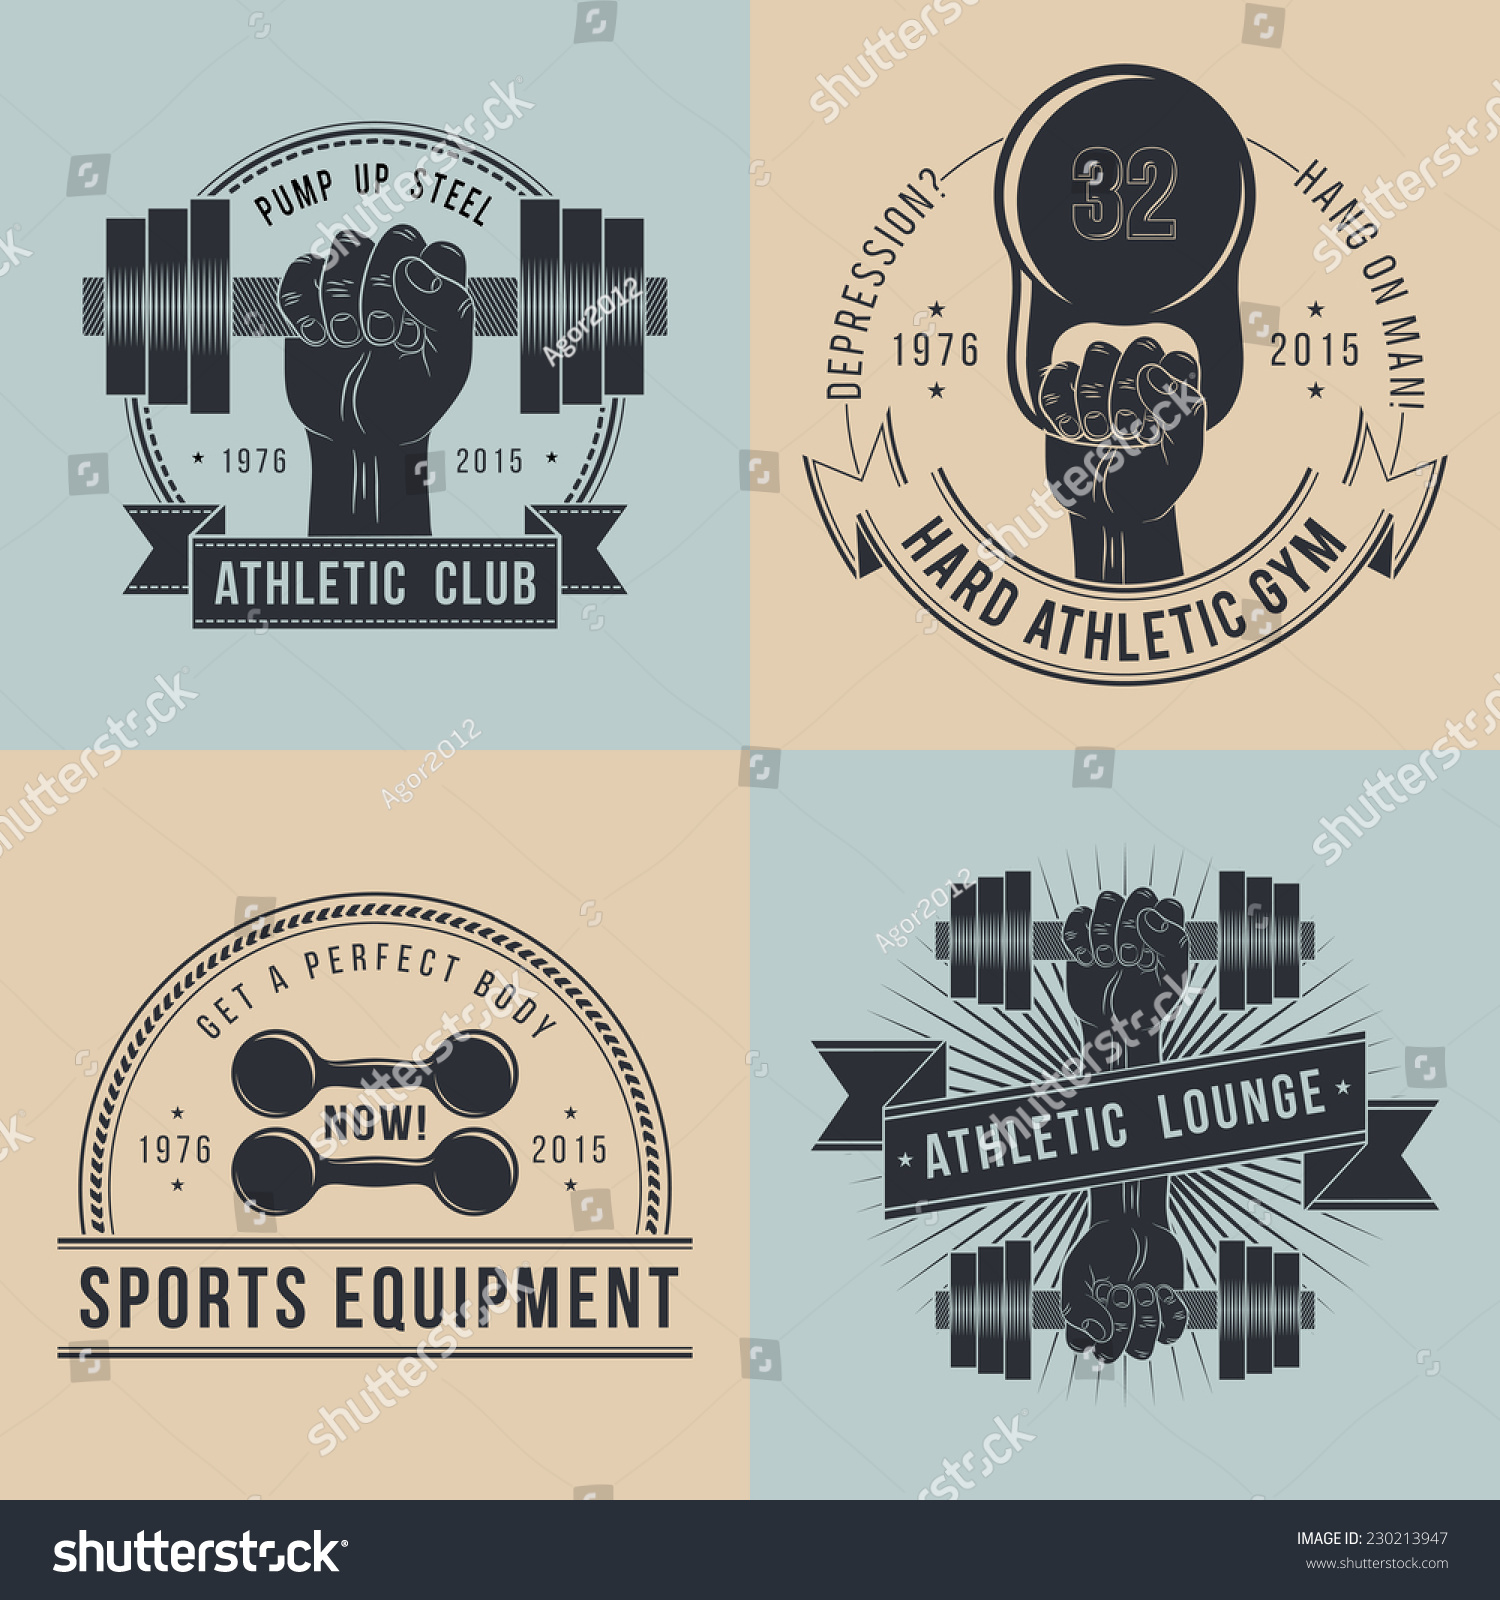 Athletic club logos